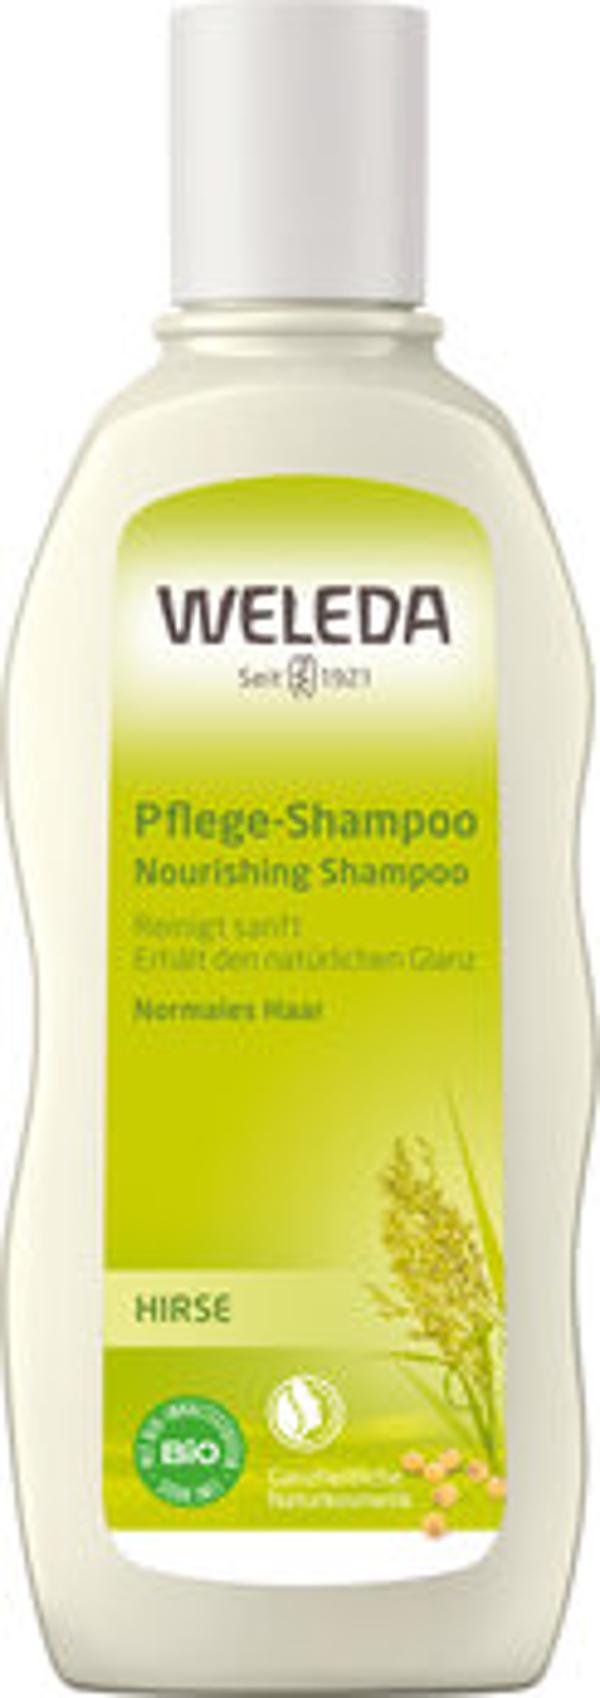 Produktfoto zu Hirse Pflege Shampoo, 190 ml